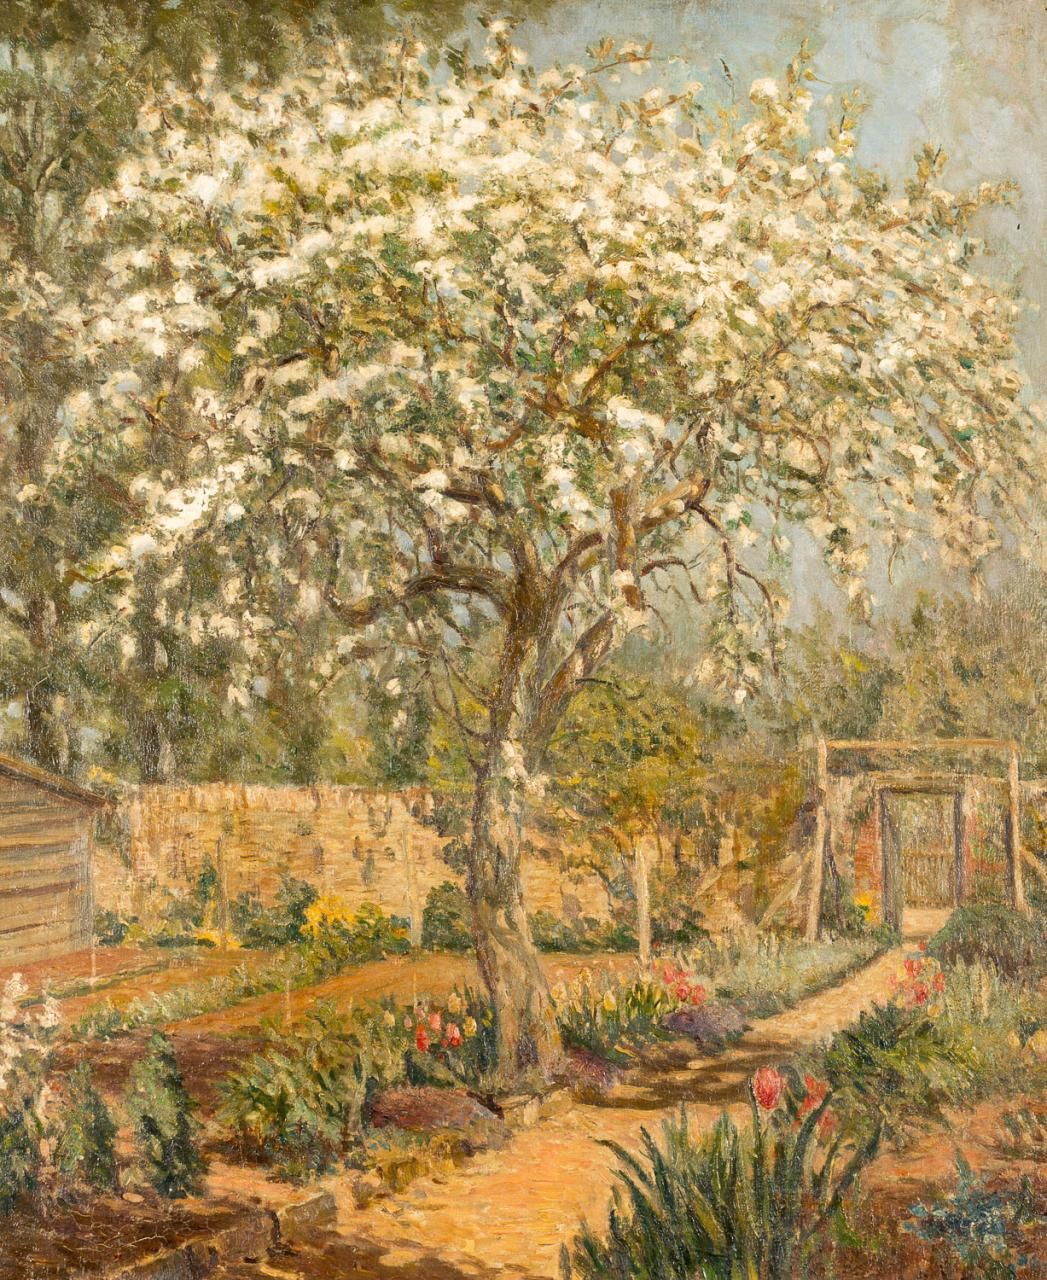 ESCUELA ESPAÑOLA, S. XX Paesaggio con mandorlo
Olio su tela
60 x 50 cm